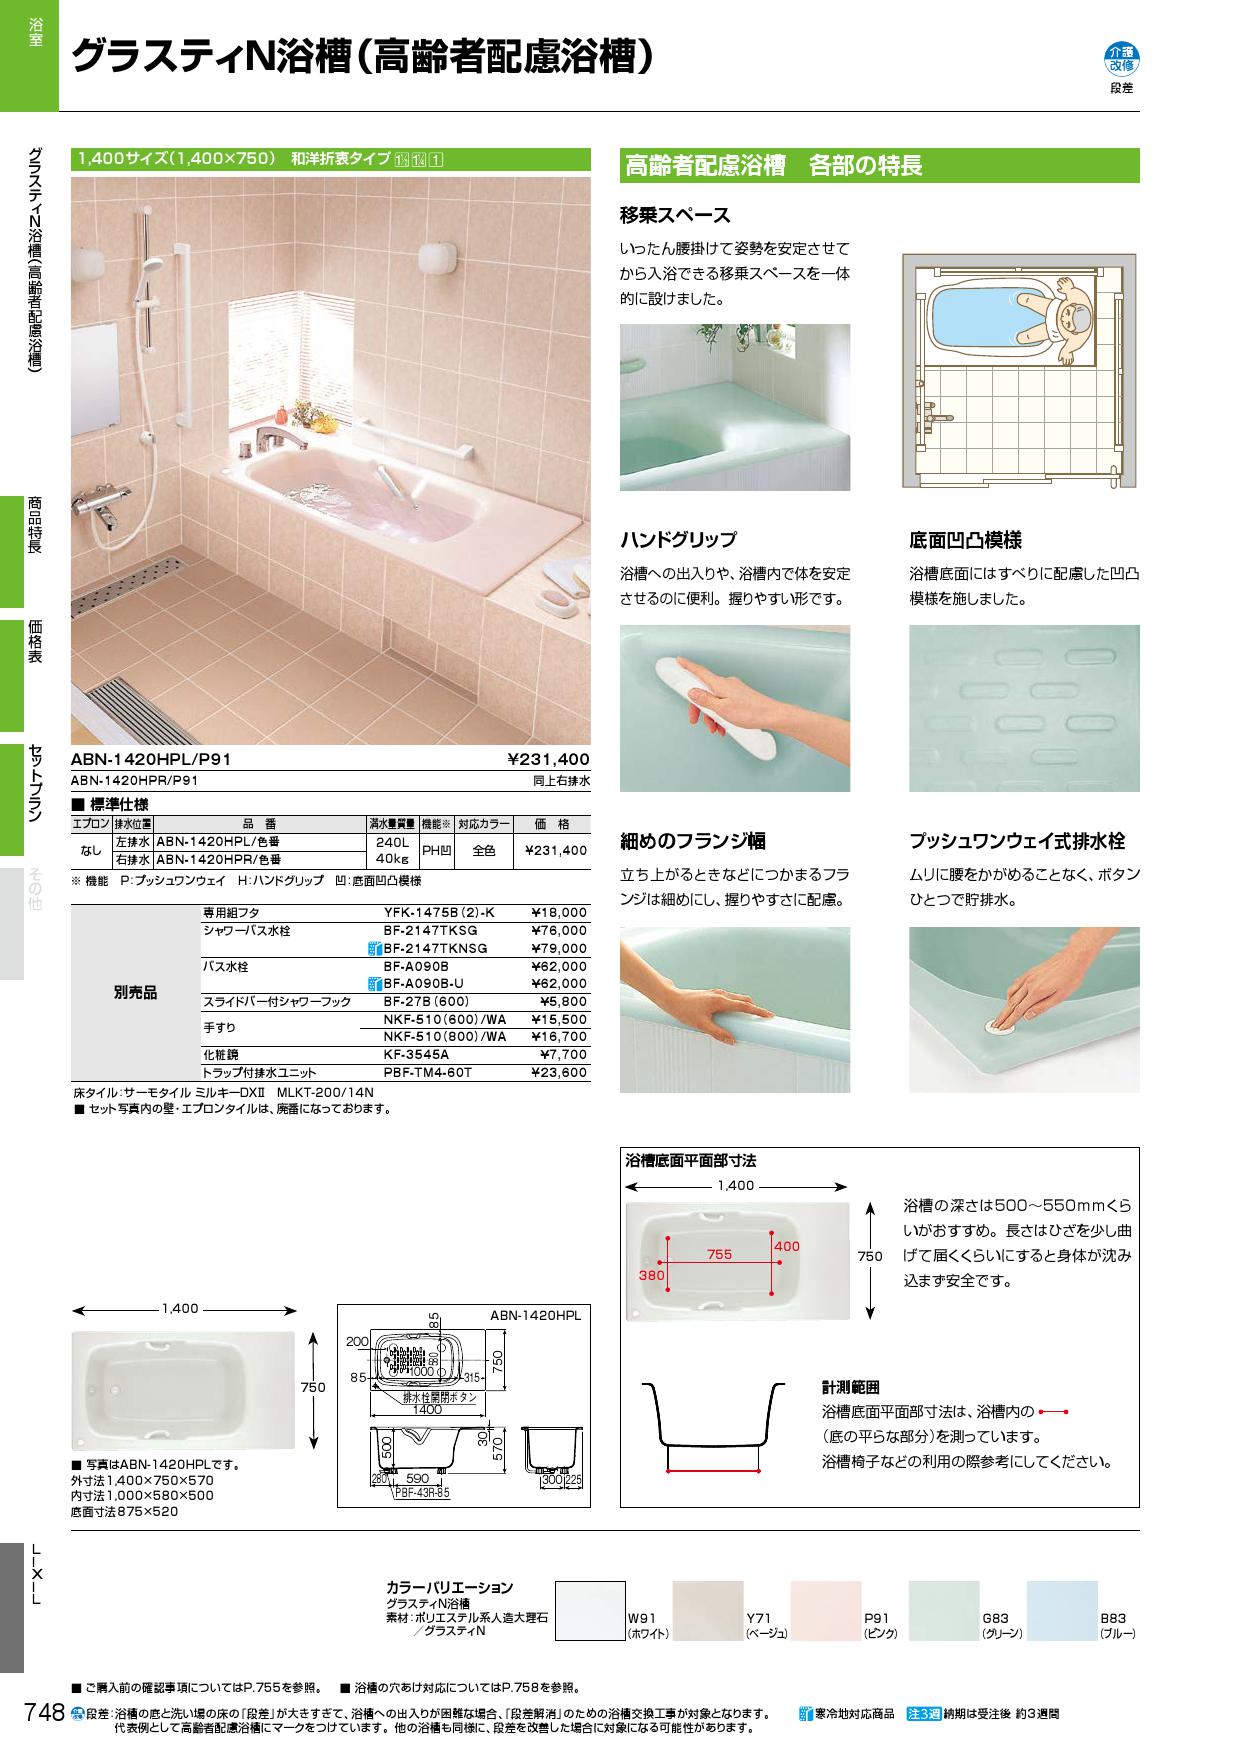 ABN-1420HPR】 リクシル グラスティN浴槽(エプロン無) яз∠ :abn-1420hpr:アールホームマート !店 通販  